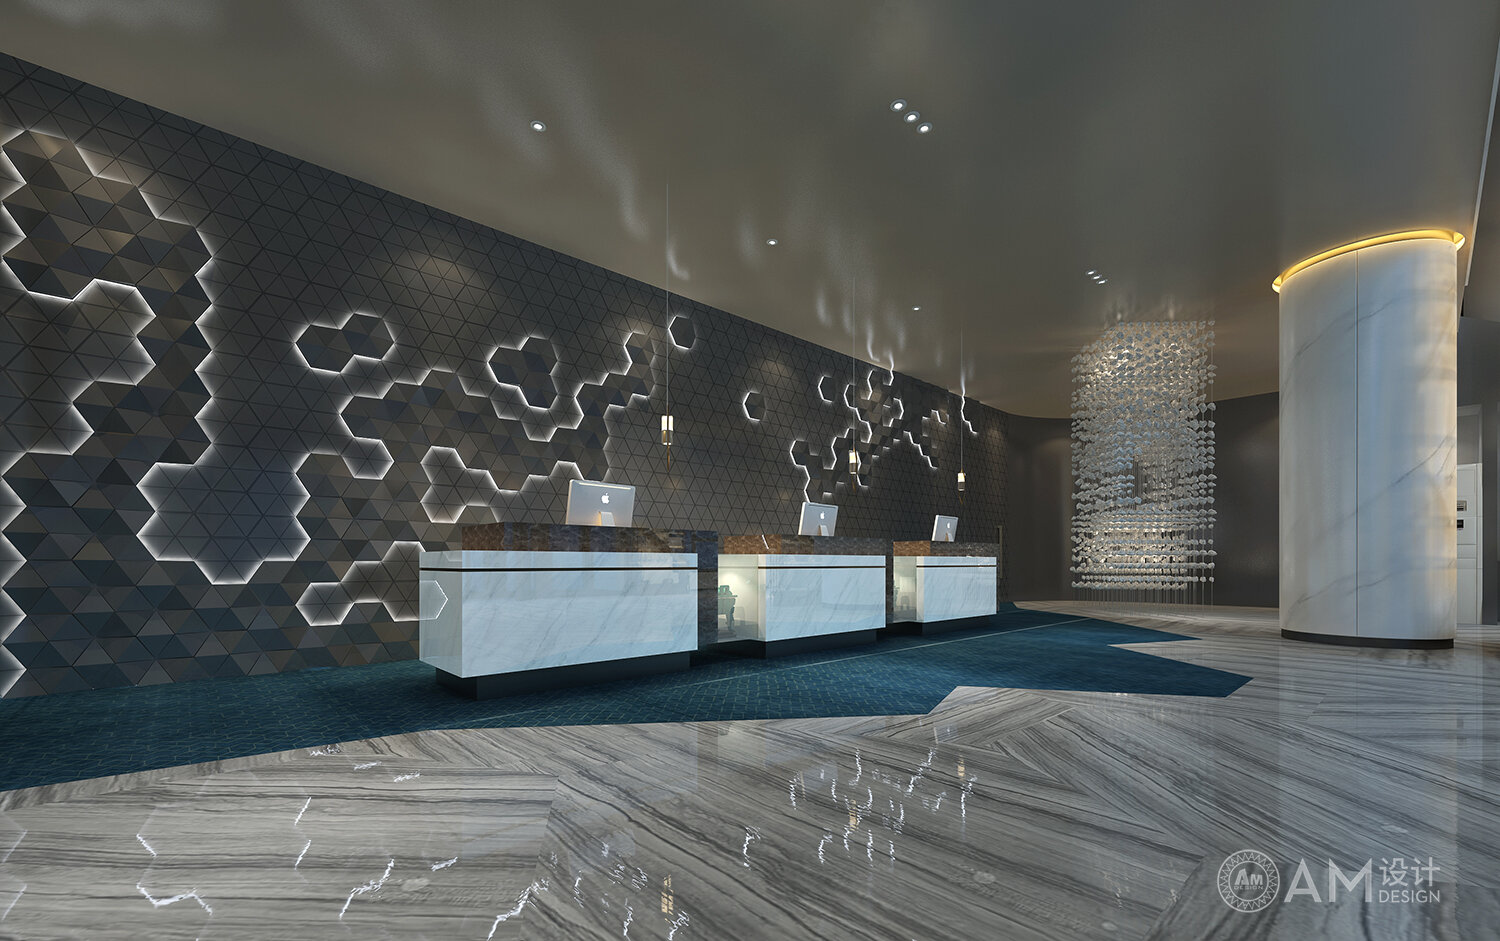 AM DESIGN | Front desk design of Jinpan hotel in Xi'an